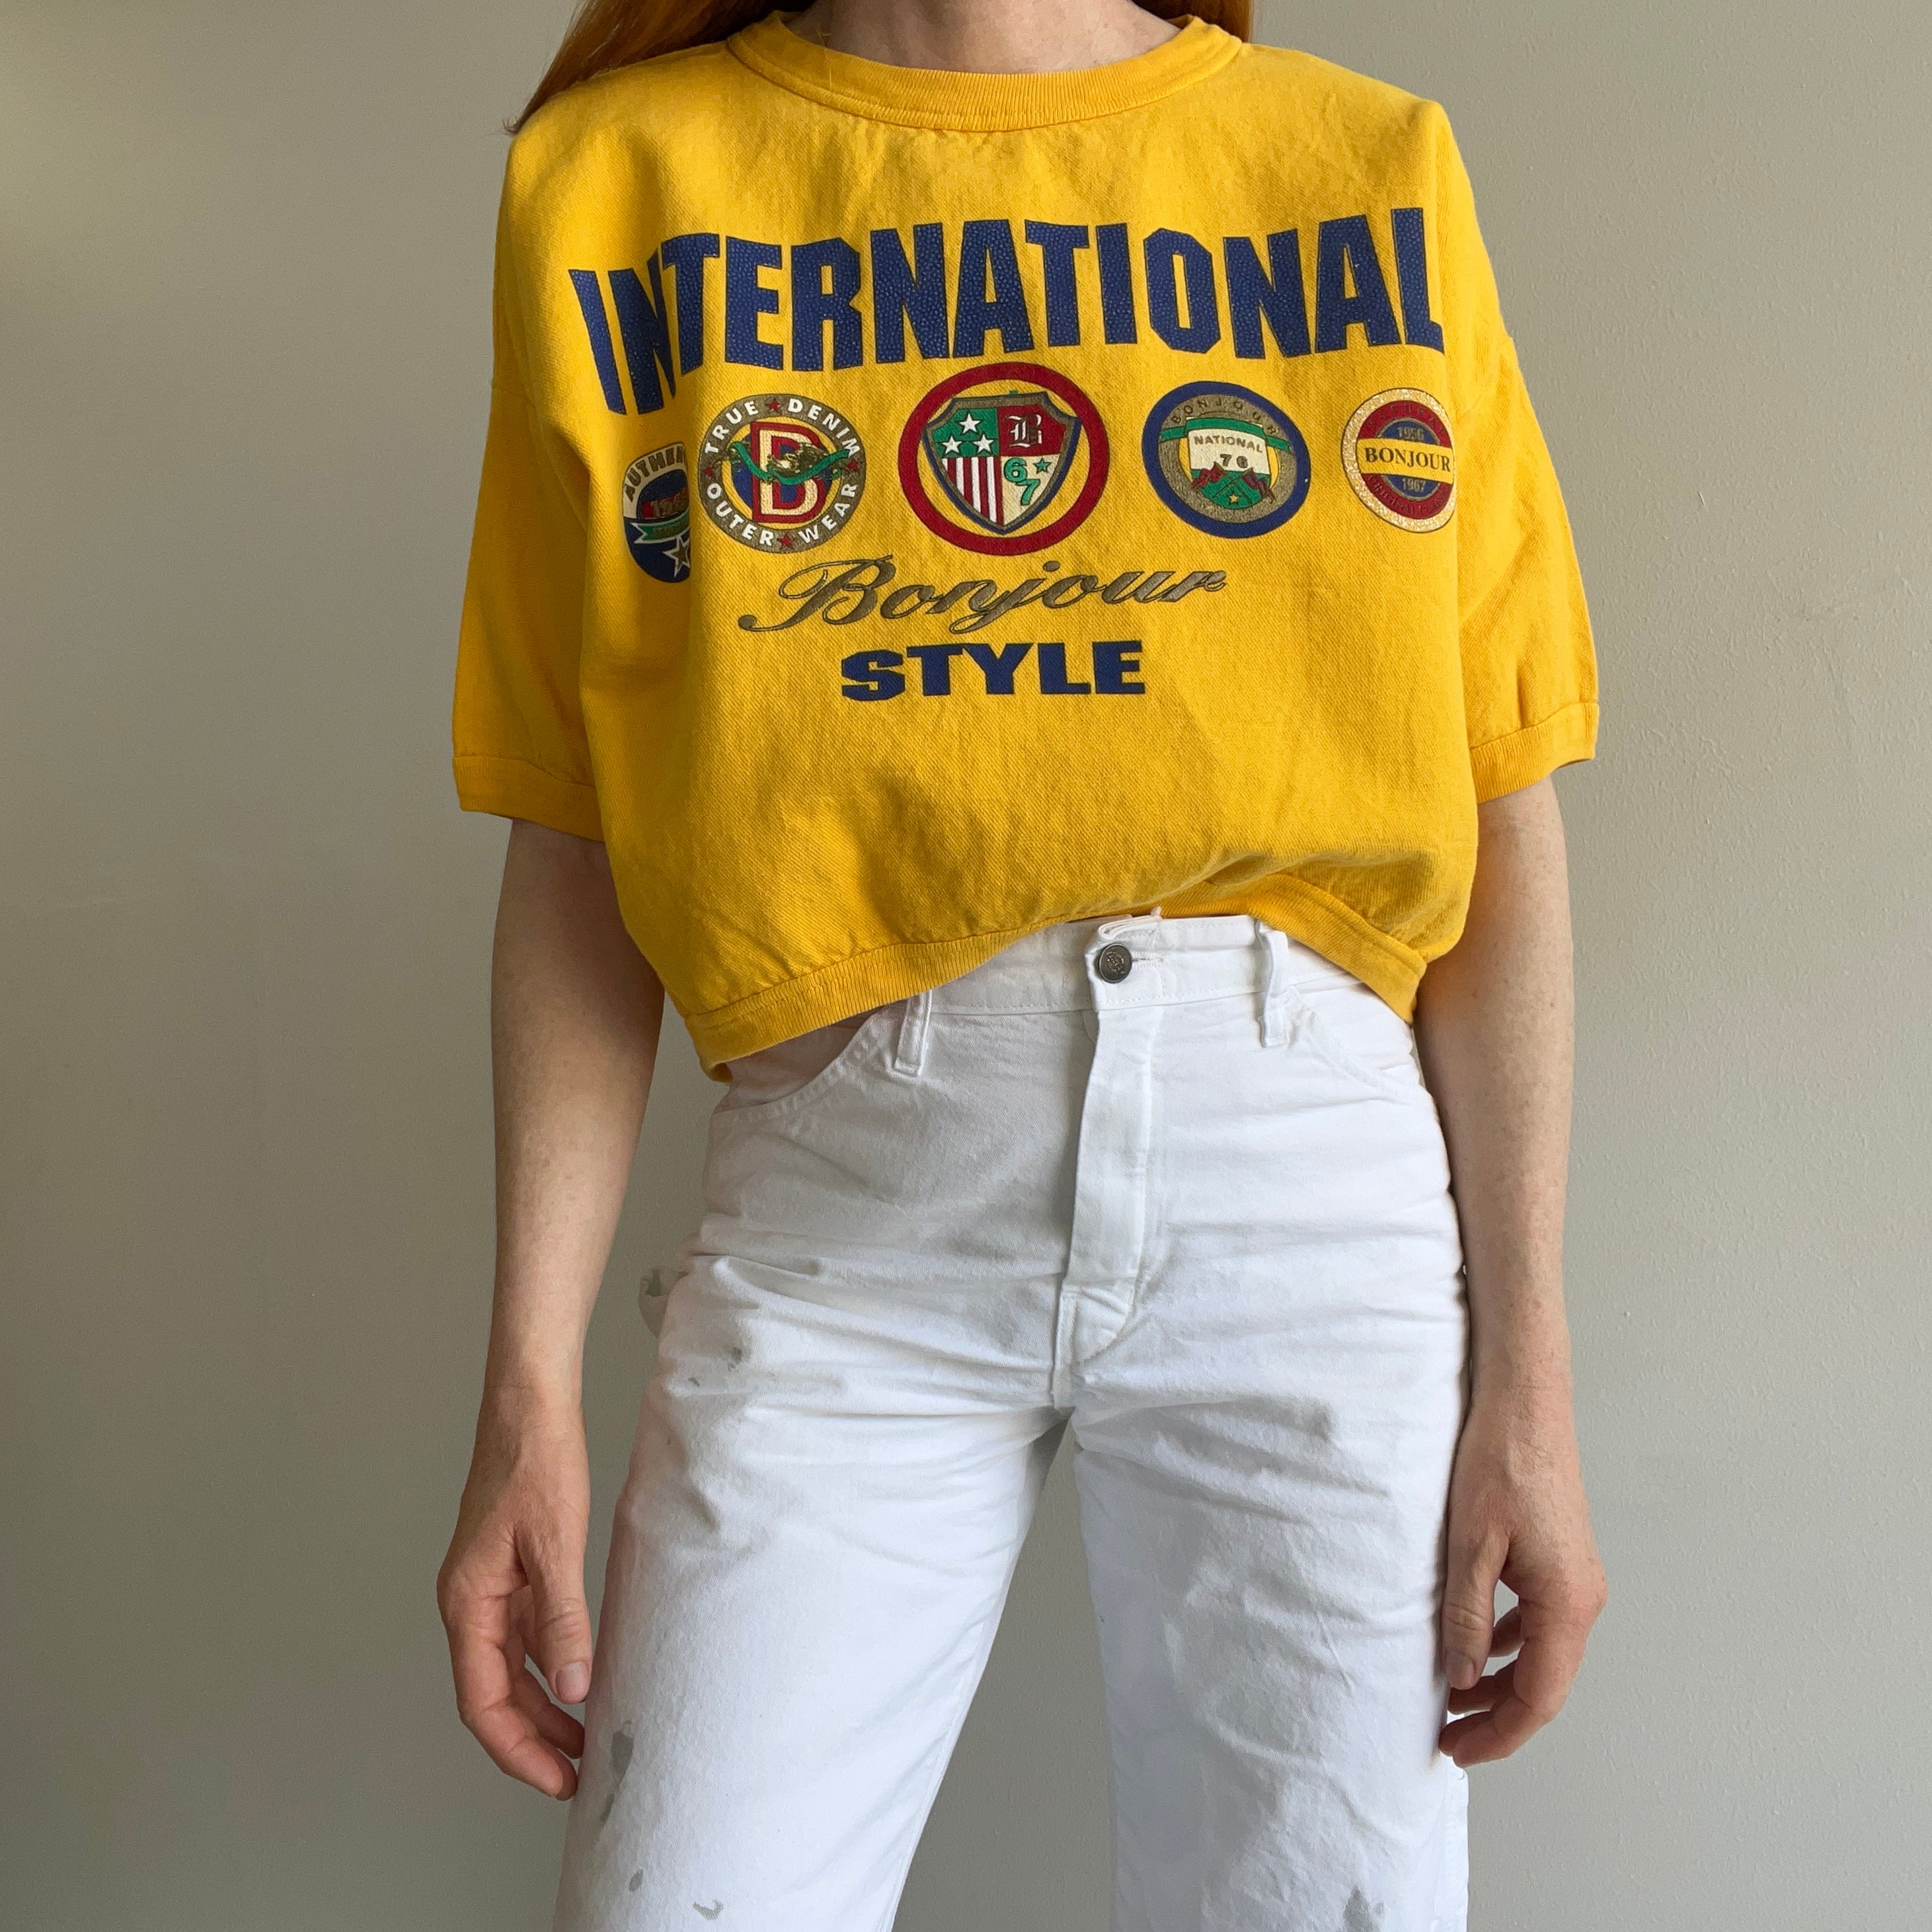 1980s Bonjour Brand Epic Graphic Sweatshirt/Shirt/Cotton/Crop